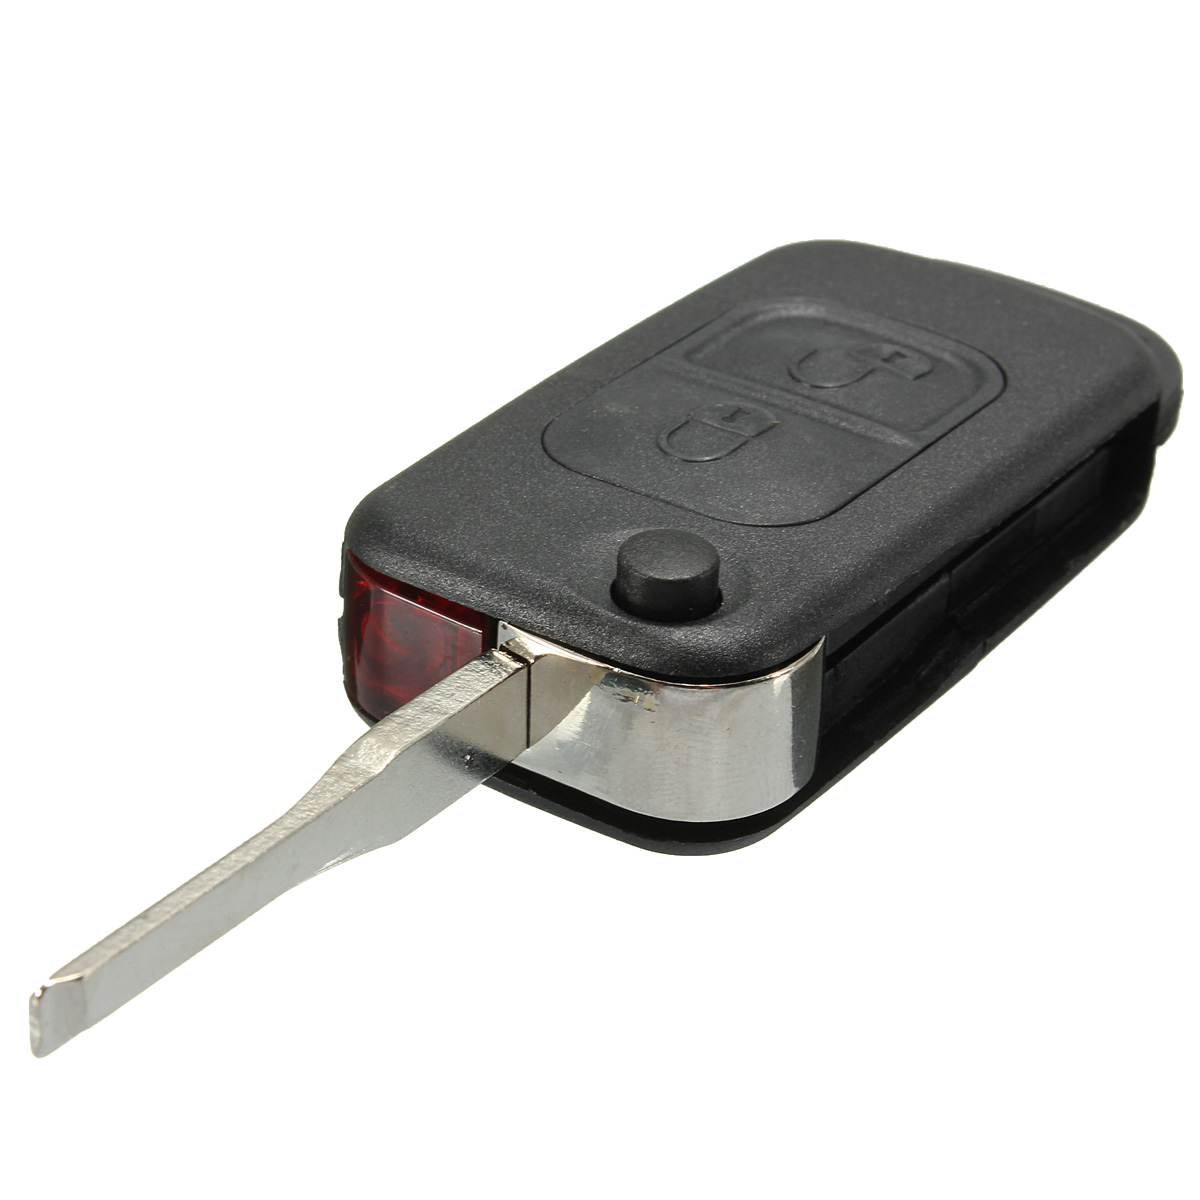 Mercedes switchblade key